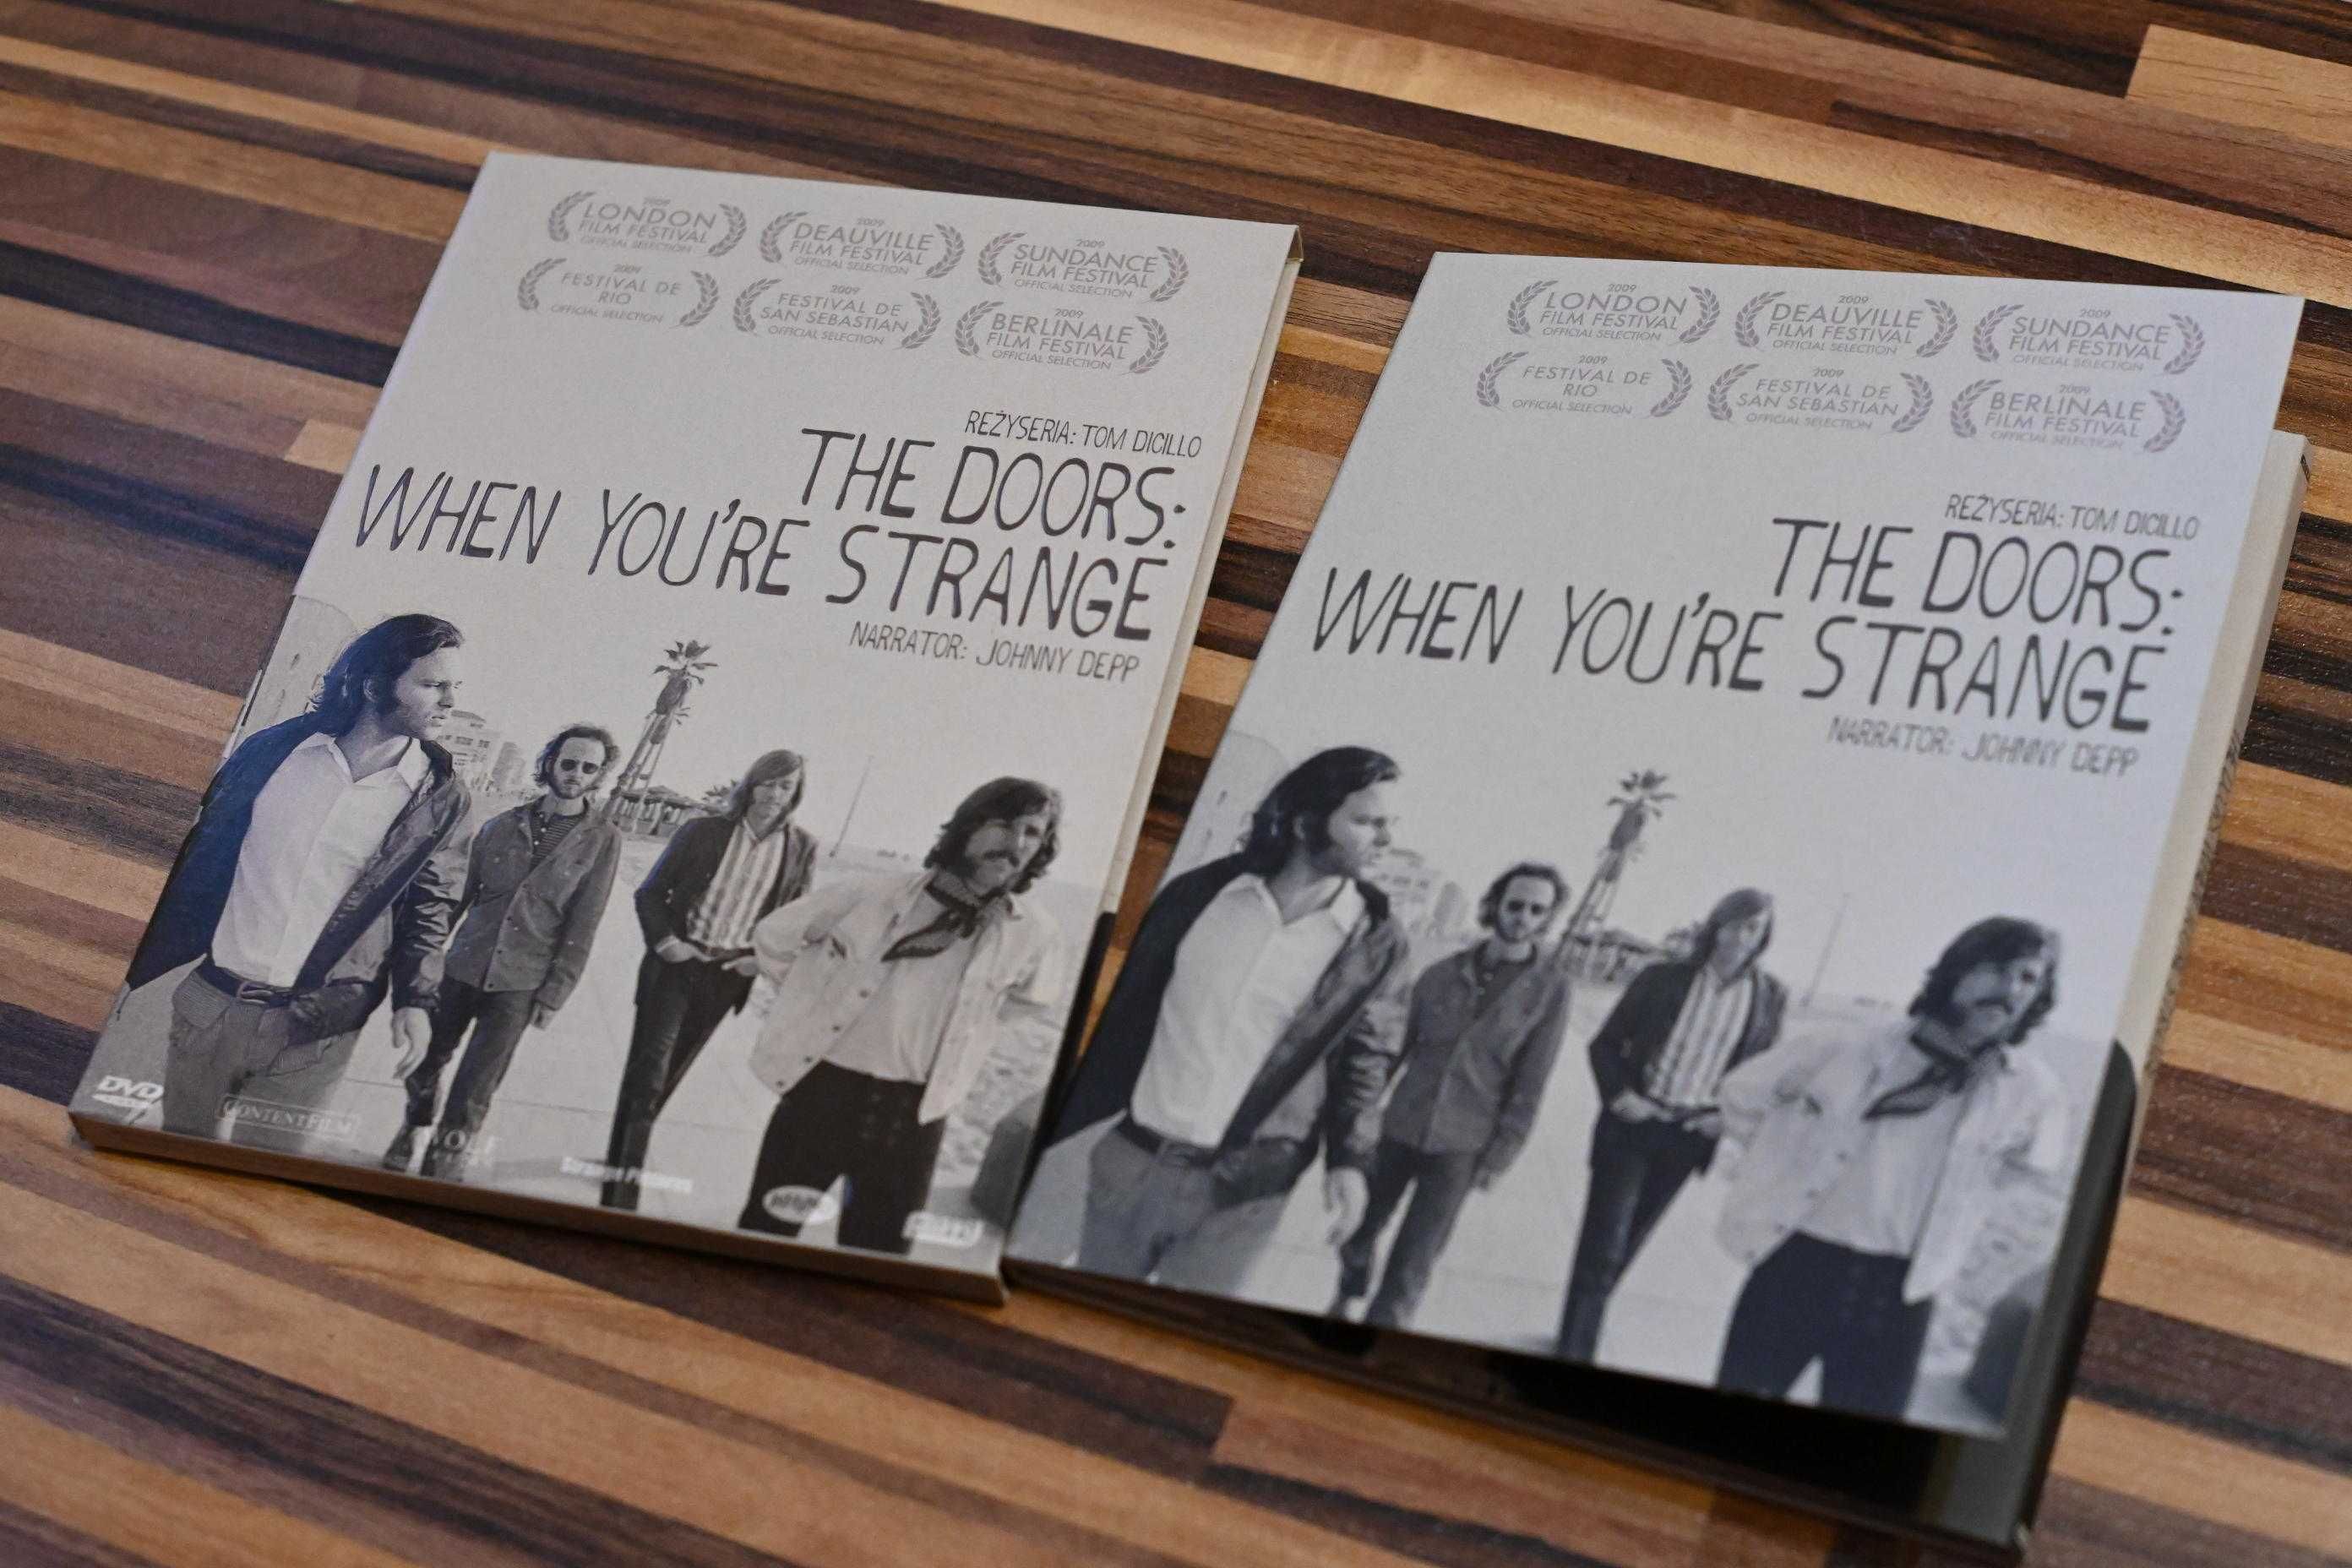 The Doors – „When you’re strange” (DVD)